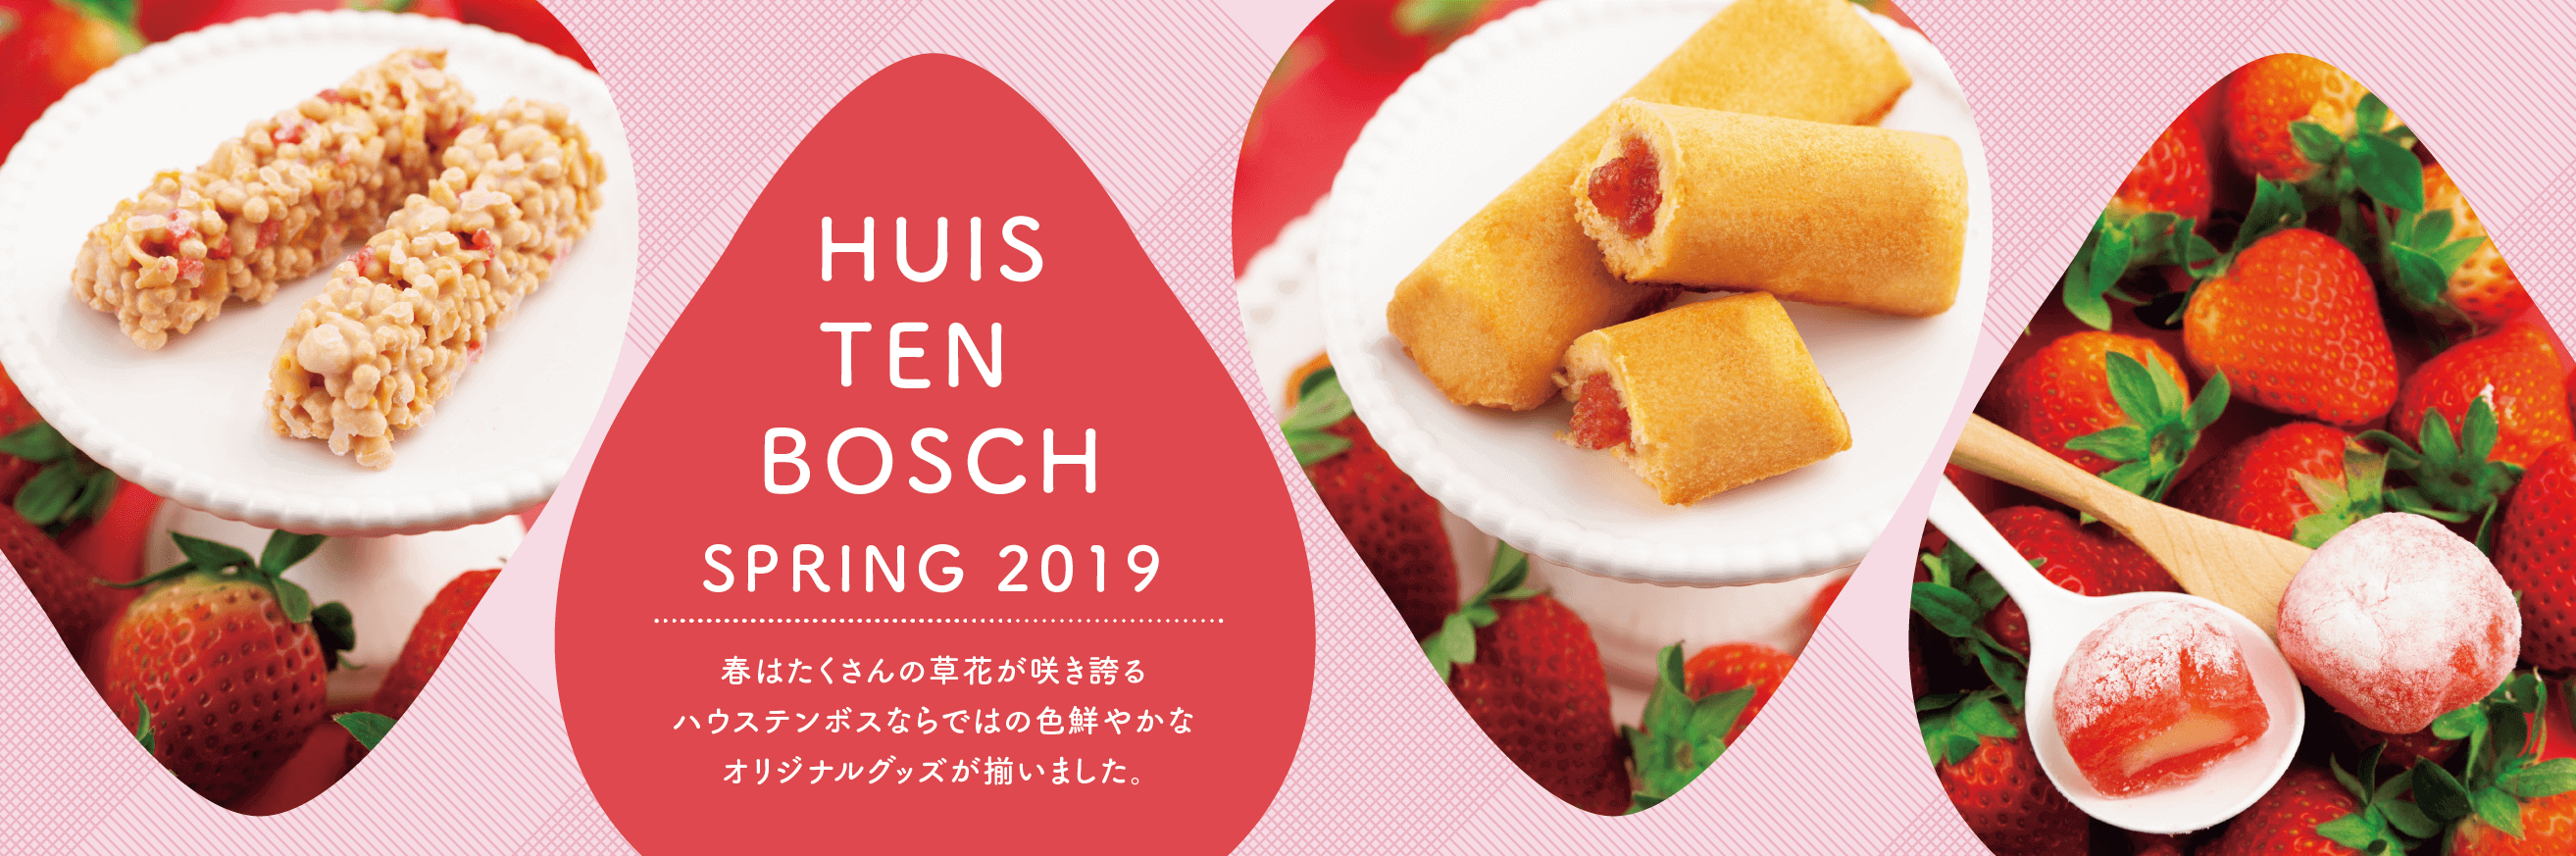 HUIS TEN BOSCH SPRING 2019 봄은 많은 꽃이 피는 하우스텐보스 특유의 화려한 오리지널 상품을 갖고있다.